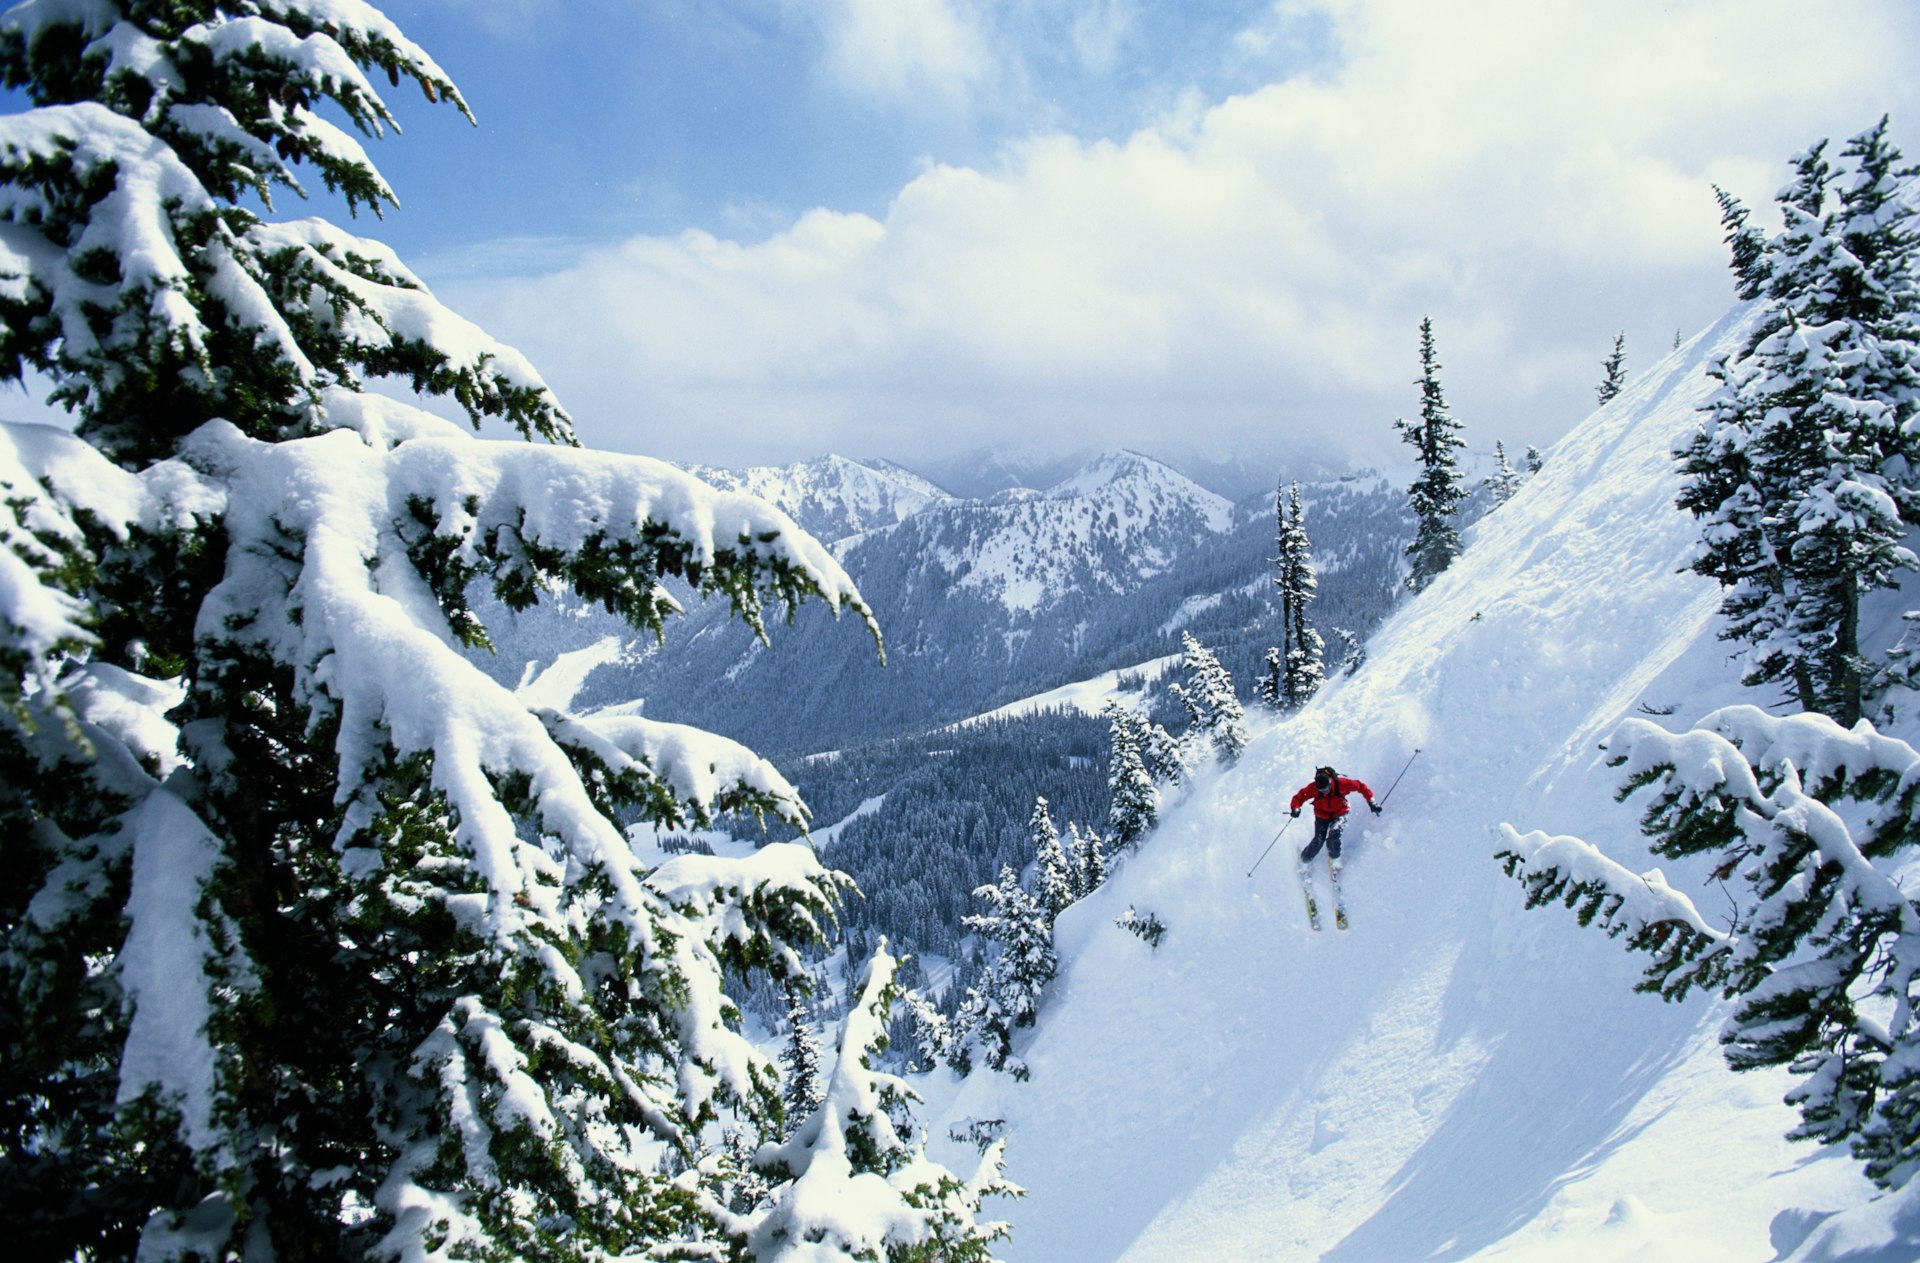 USA, Washington State, Crystal Mountain, man skiing on steep slope